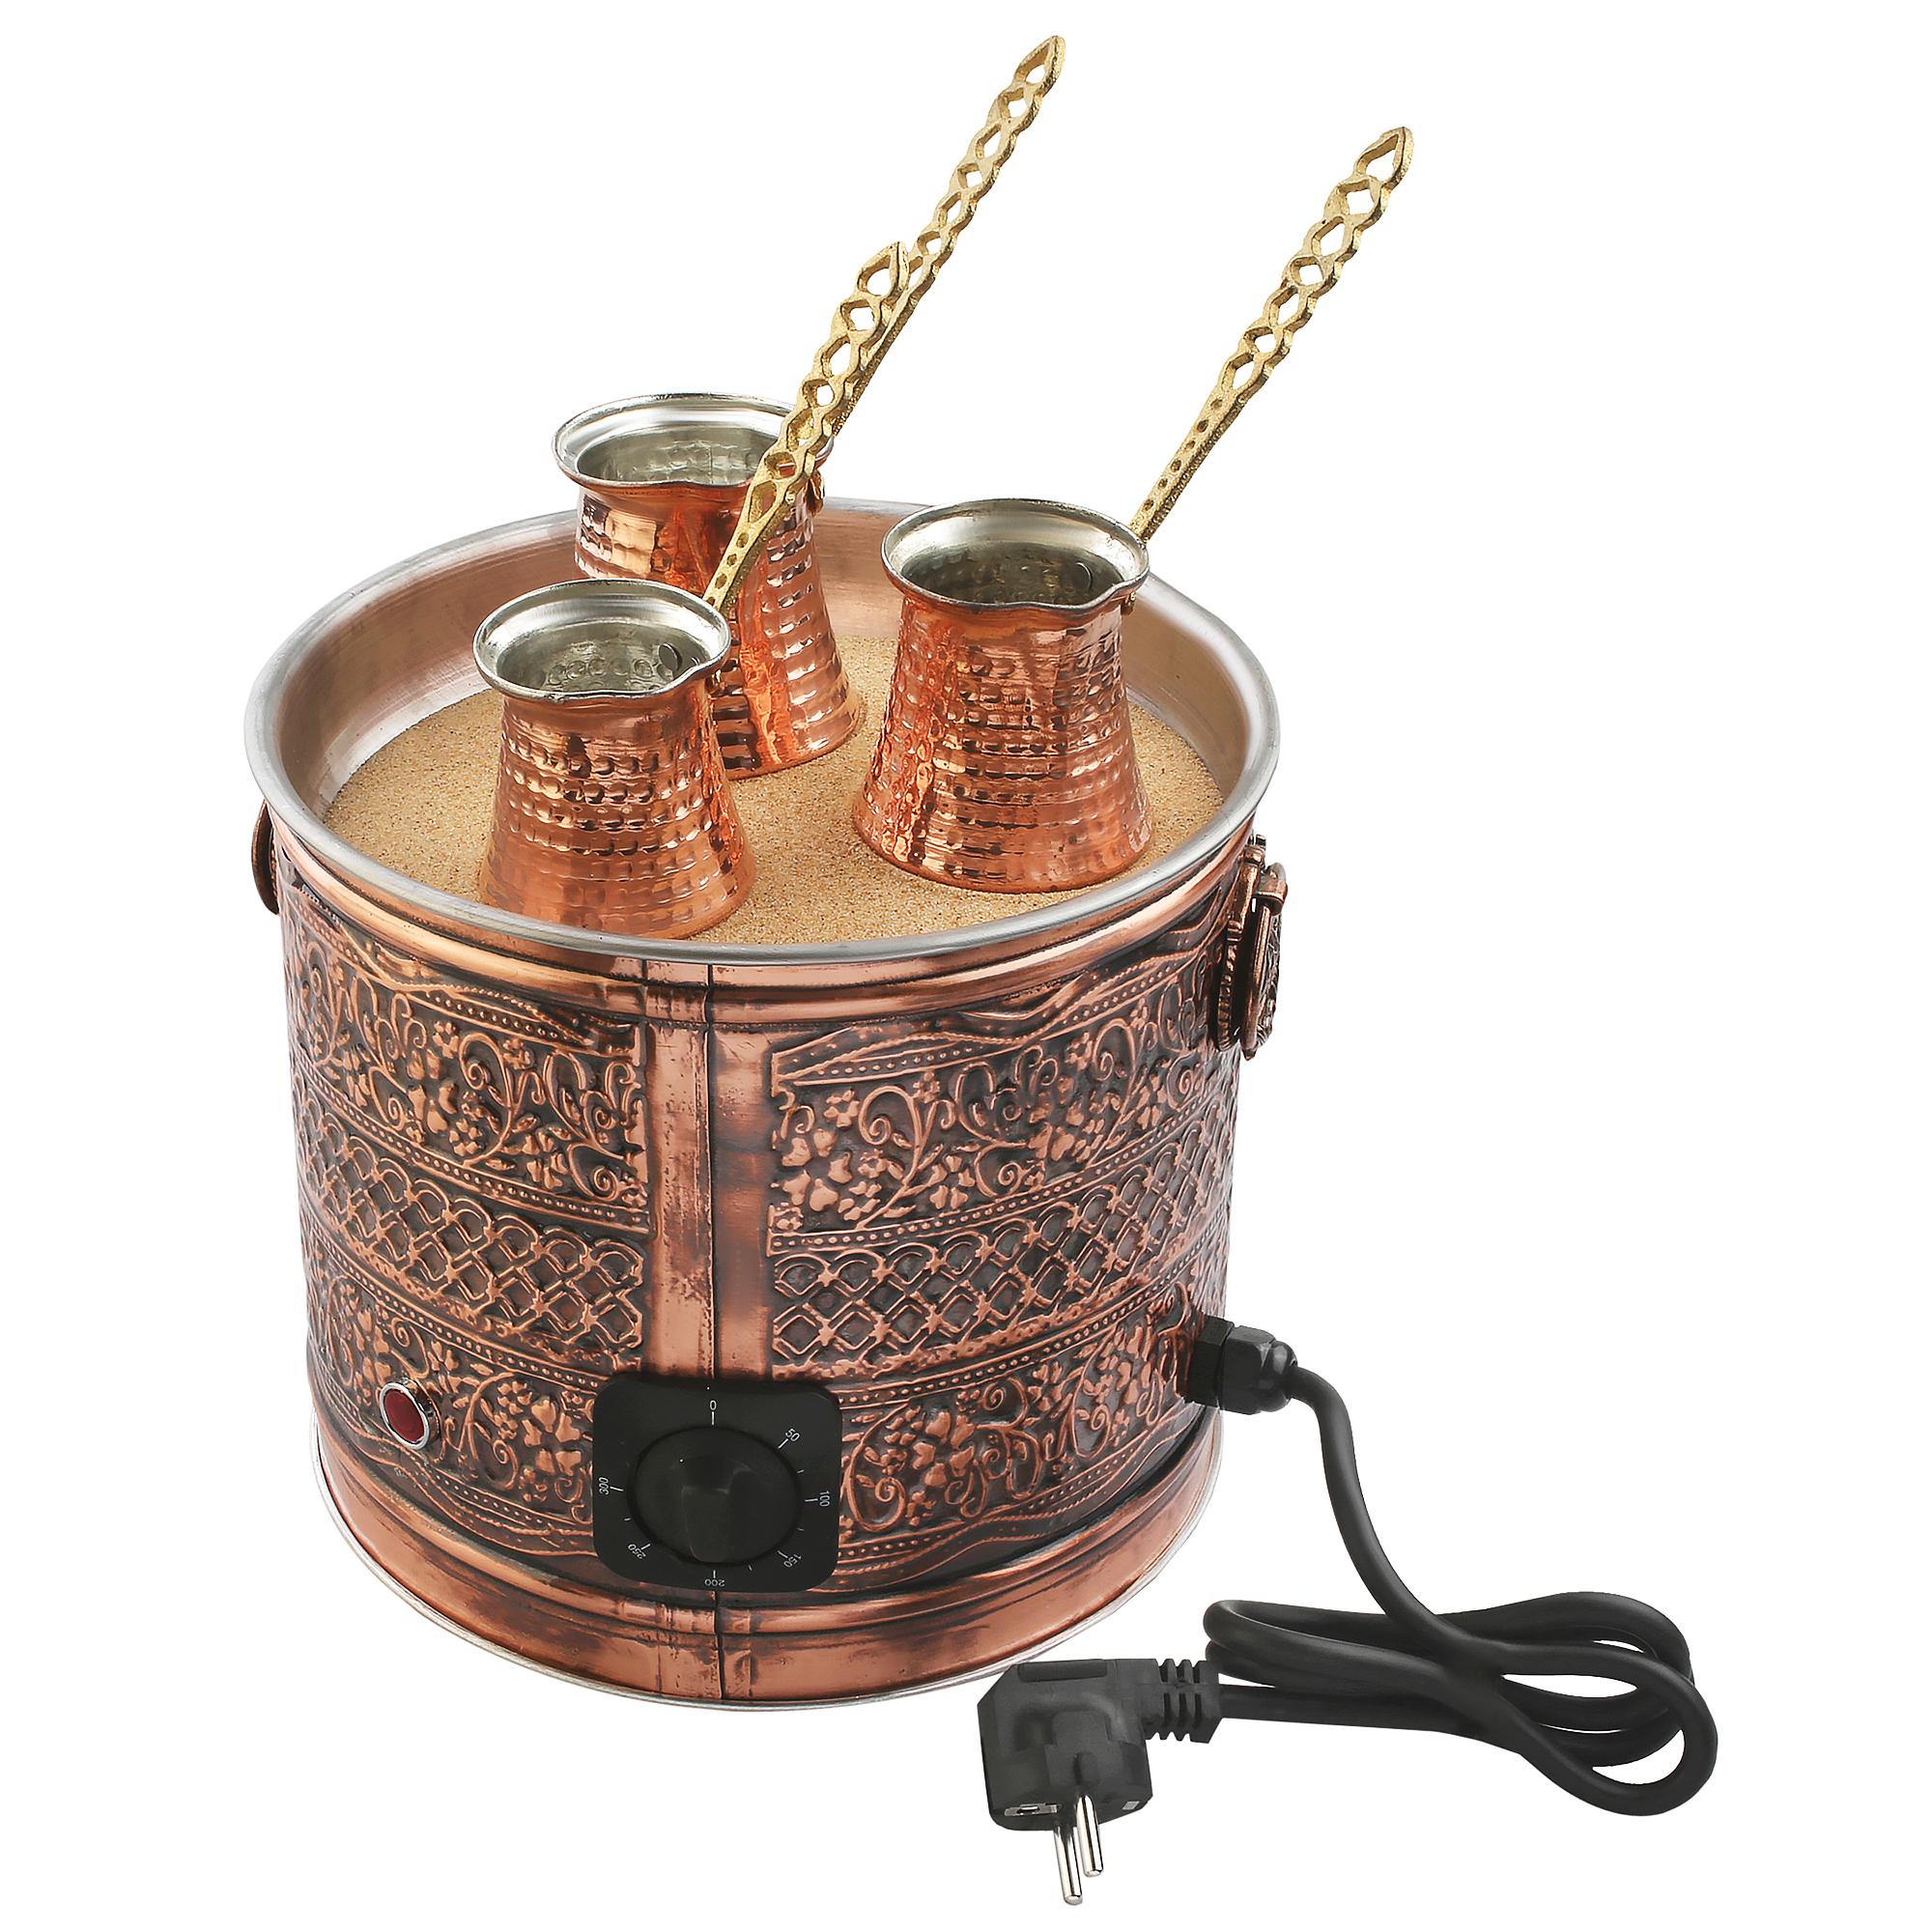 Turkey Horizon Authentic Turkish Copper Electric Hot Sand Coffee Maker Heater Machine 110V - 220V Kitchen & Dining